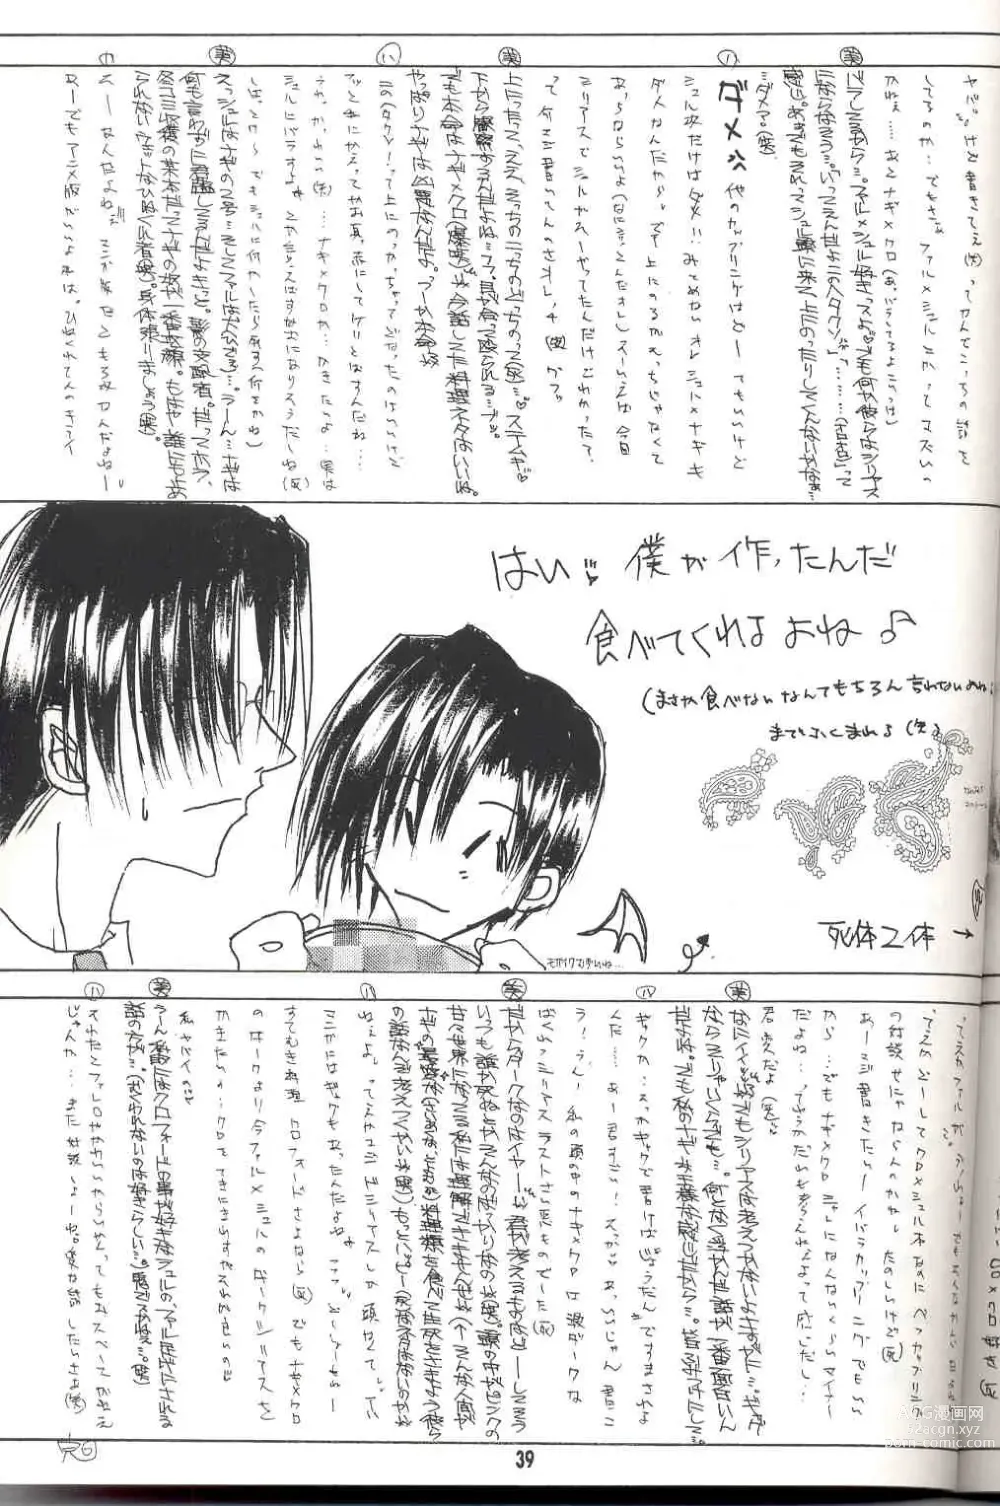 Page 38 of doujinshi Sentimental